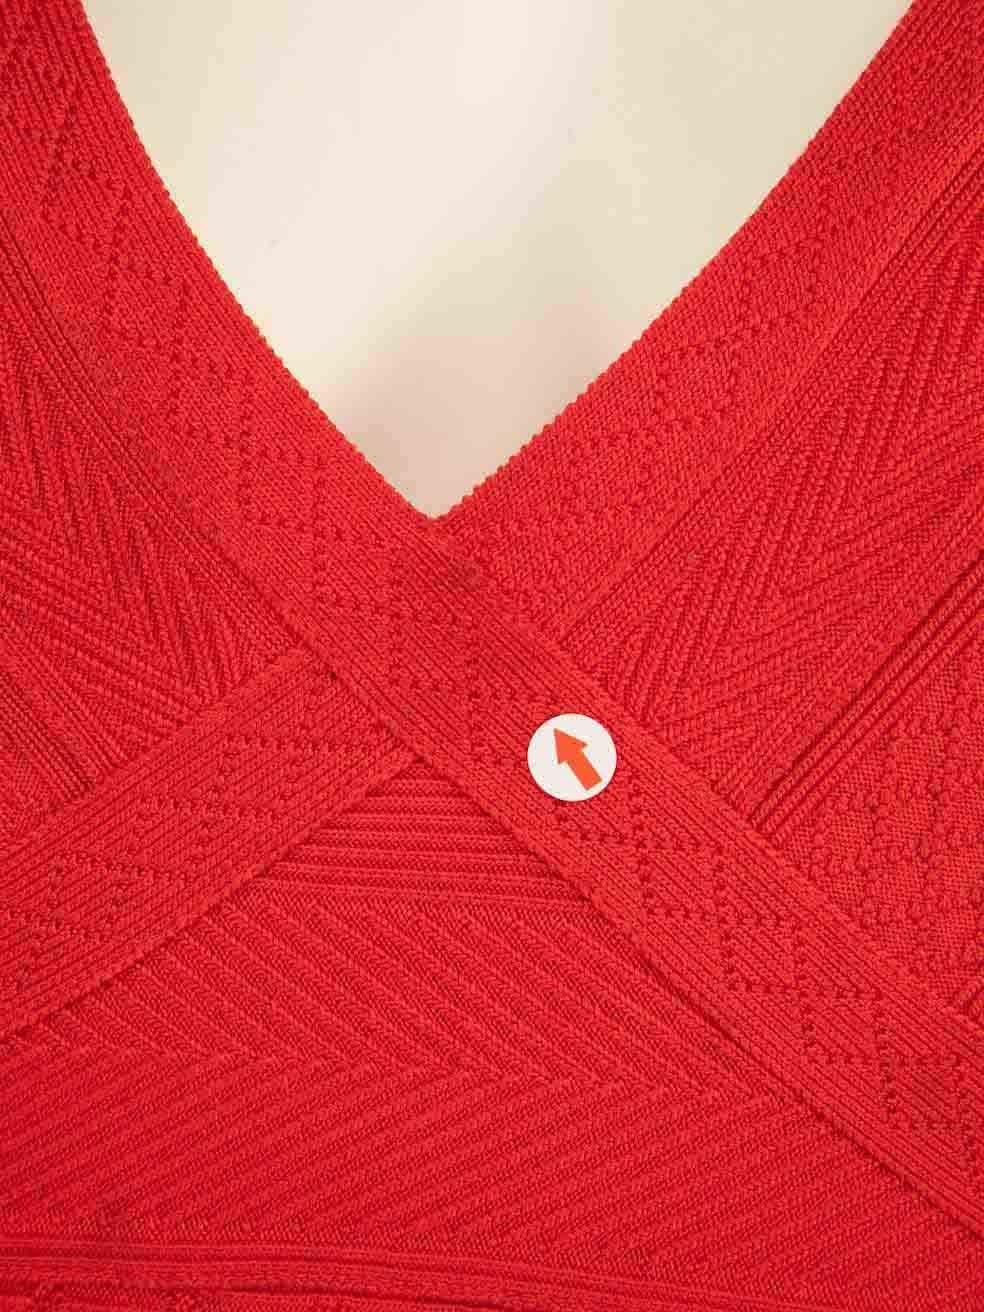 Women's Herve Leger Red V-Neck Knee Length Knit Dress Size S For Sale